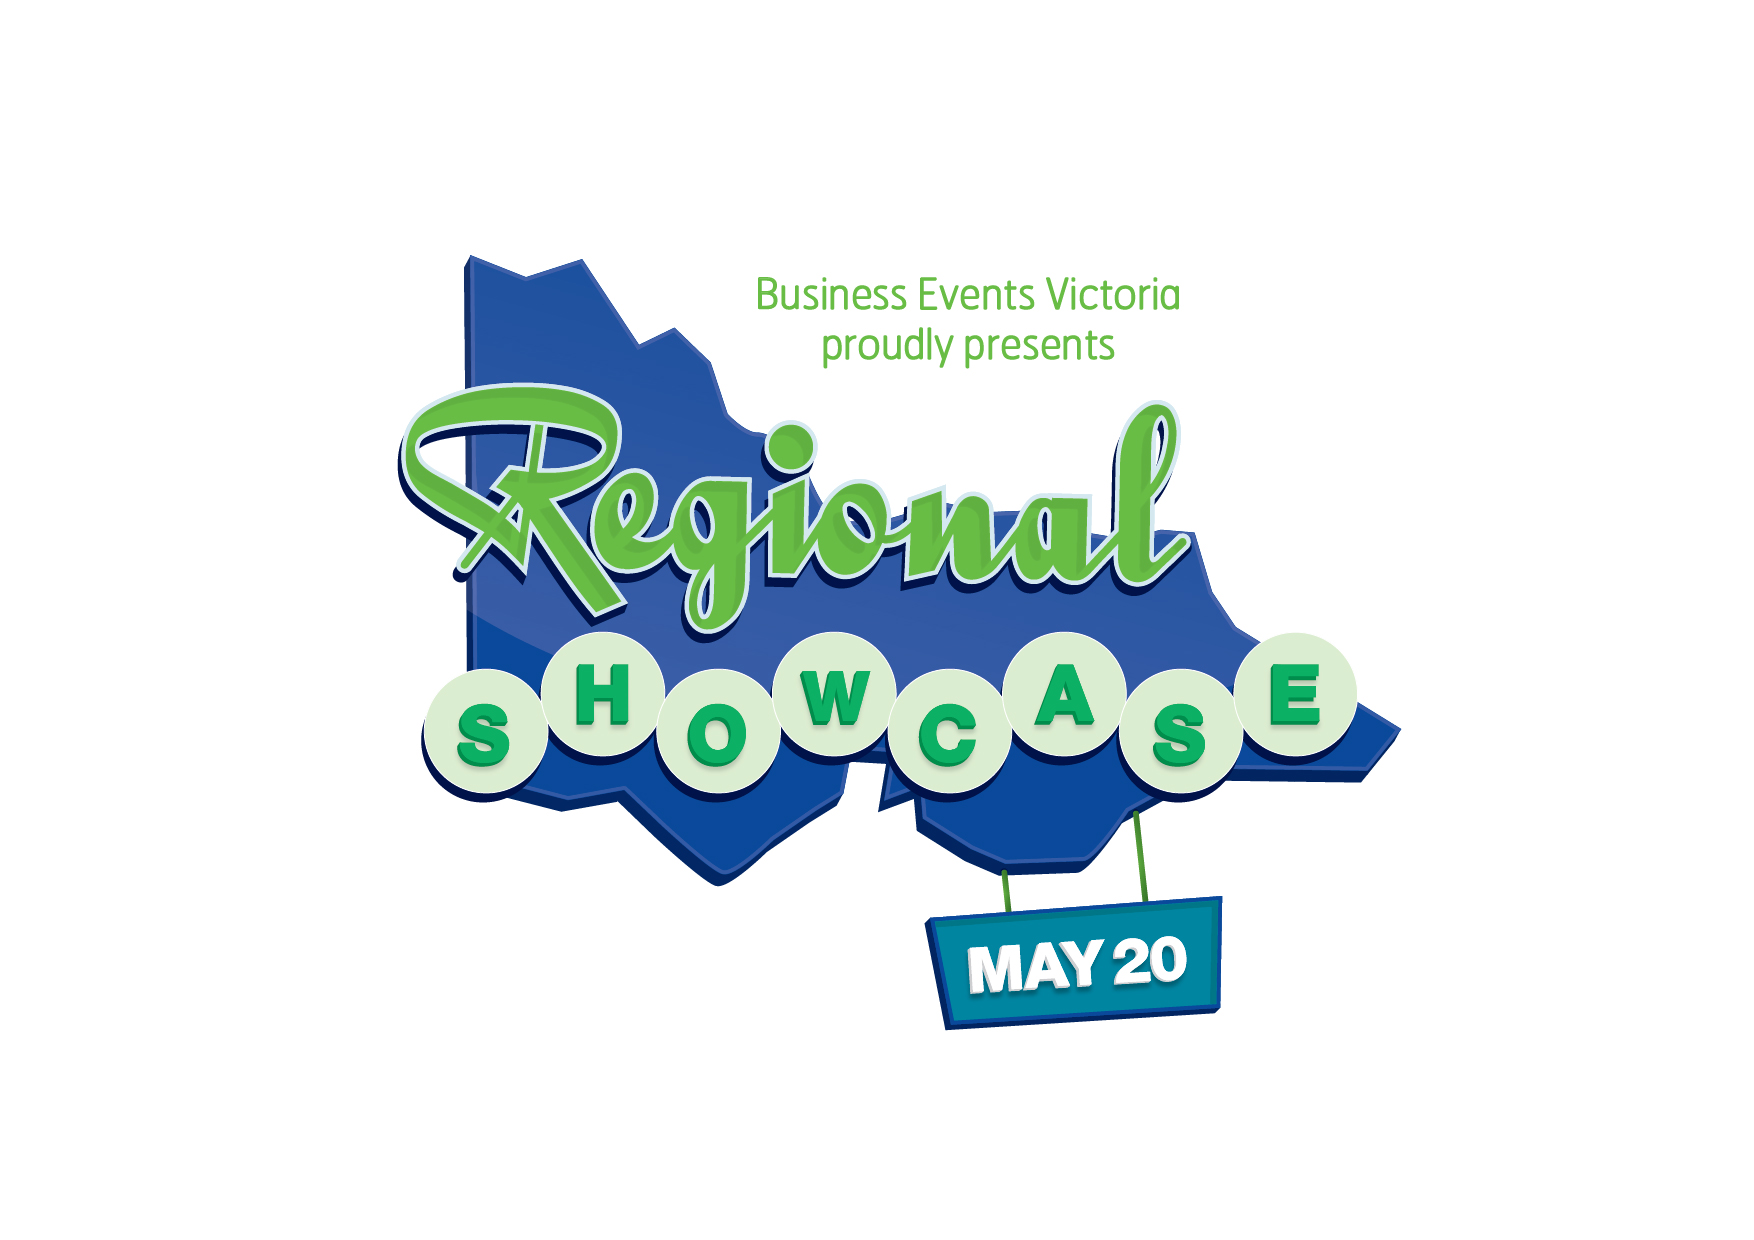 Regional Victoria Showcase